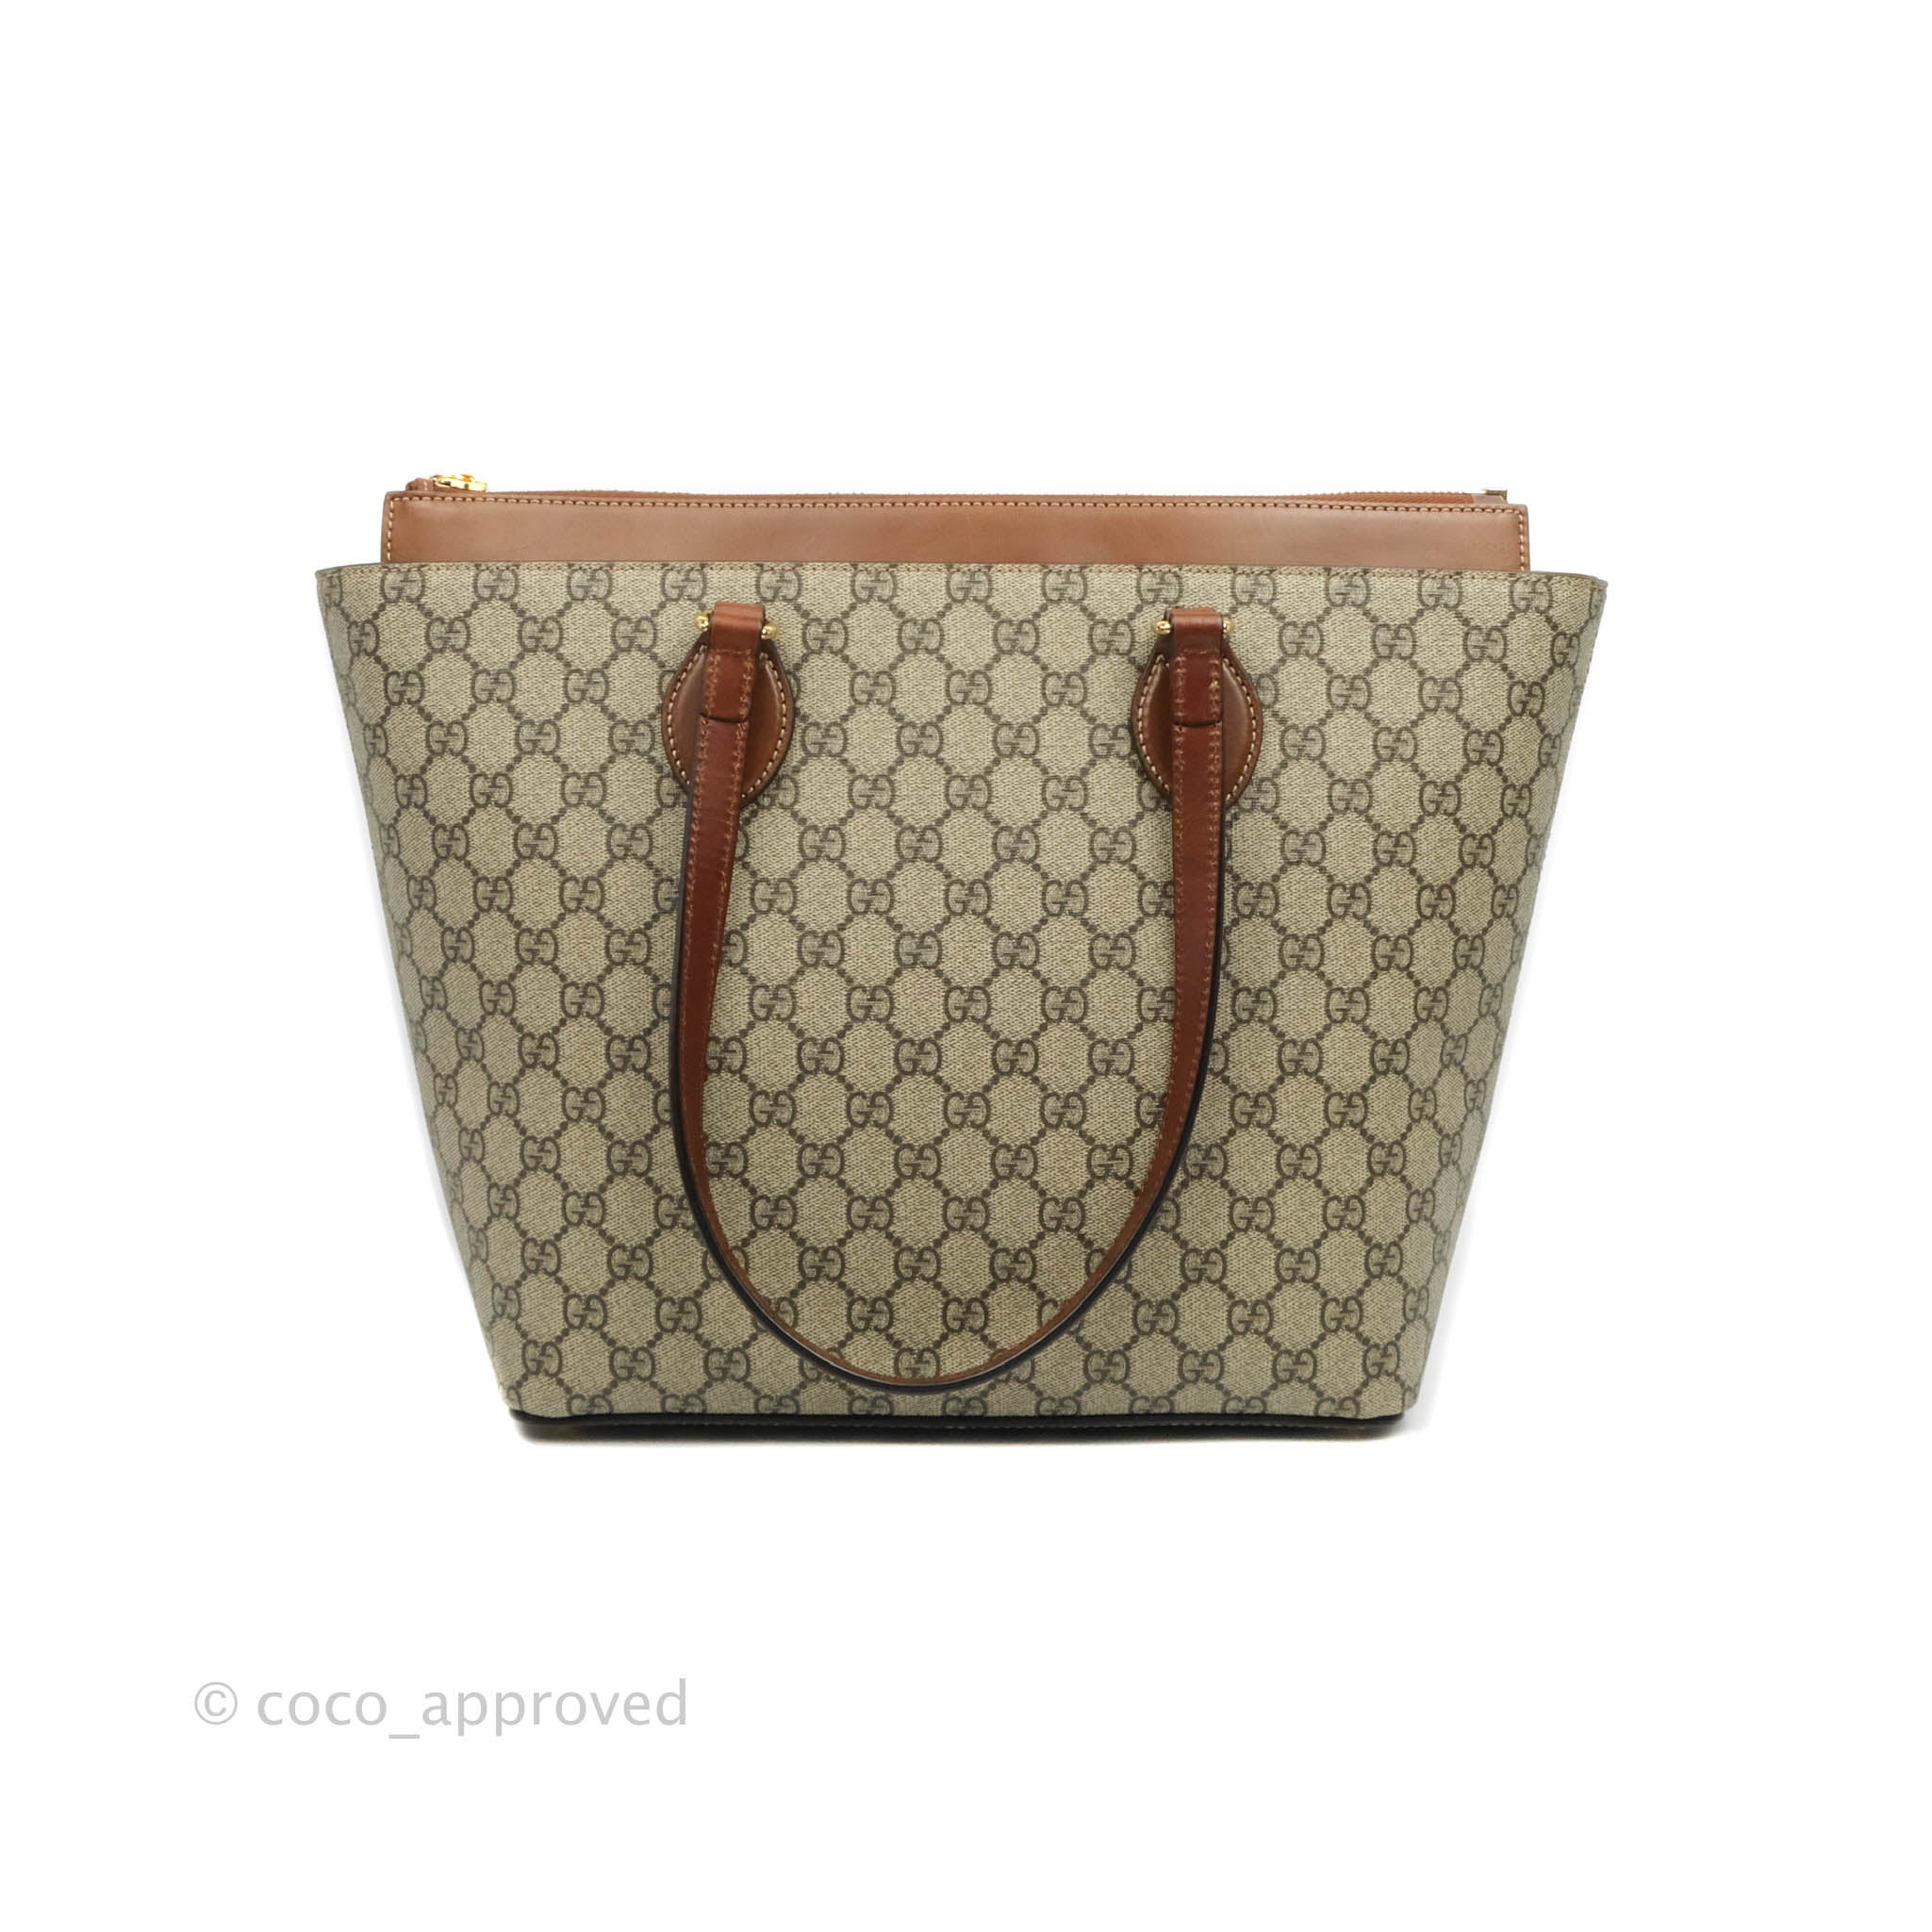 Sold at Auction: Gucci Small Hobo Shoulder Bag, in beige monogram